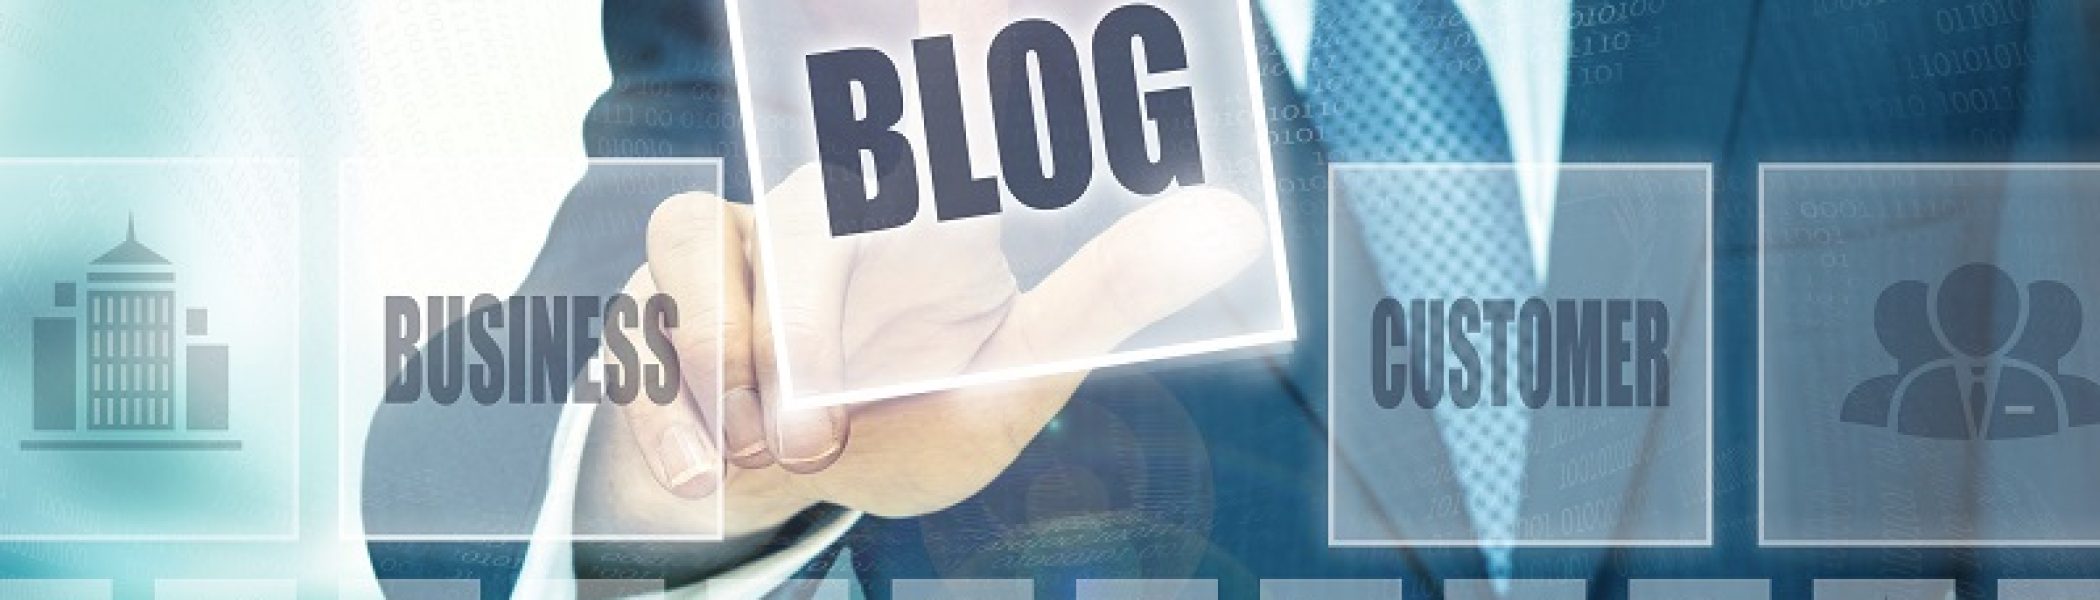 Blog Management Service